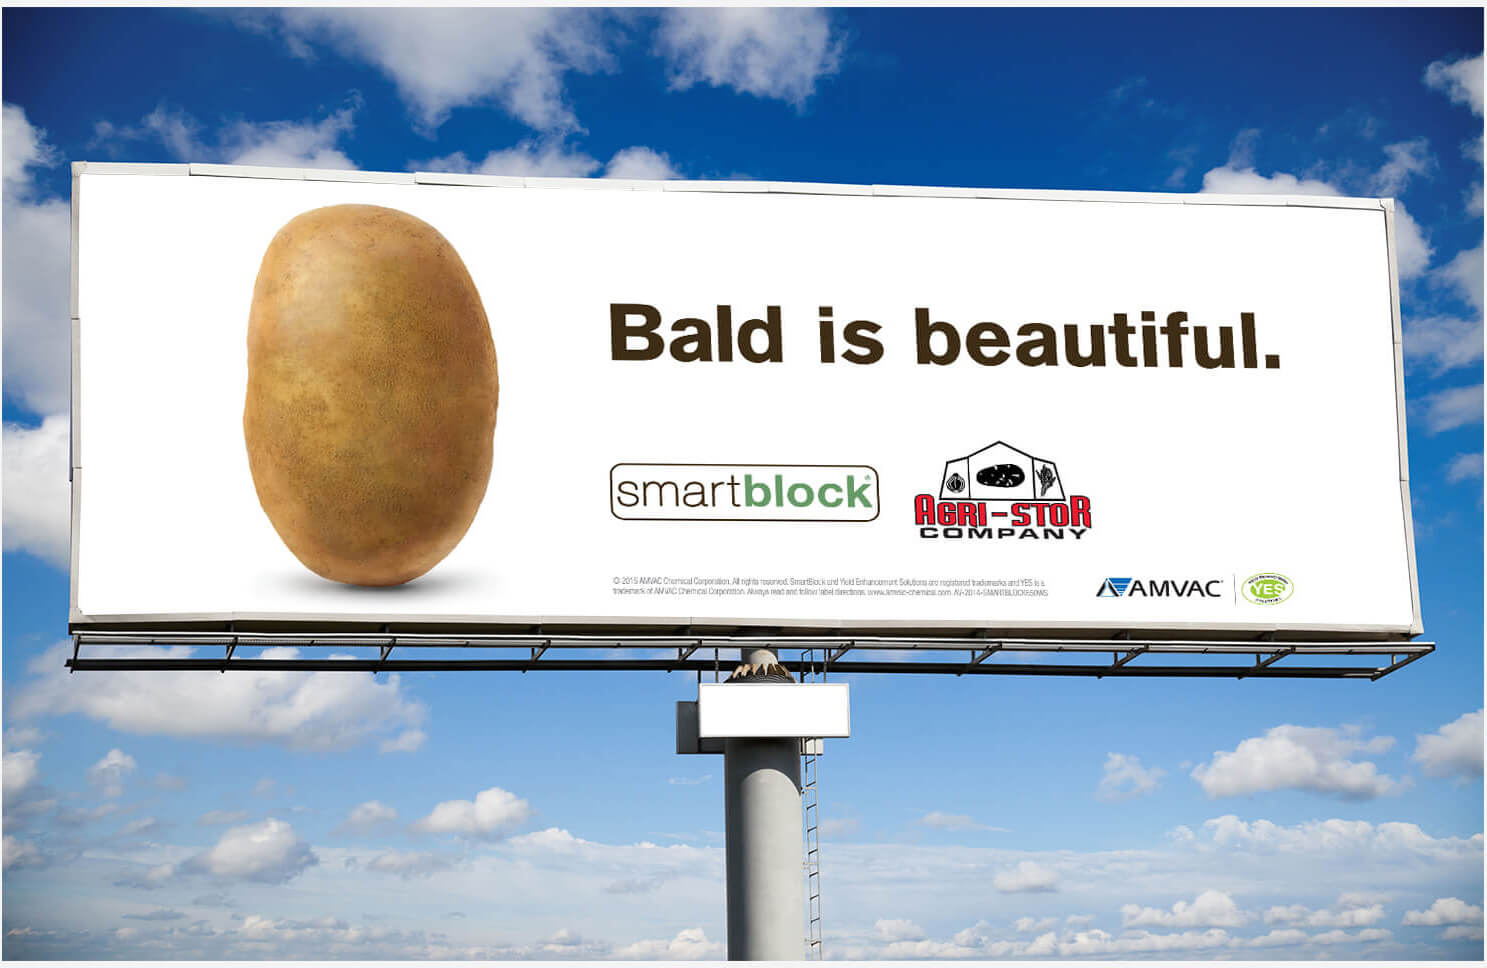 Amvac Smartblock, large billboard signs